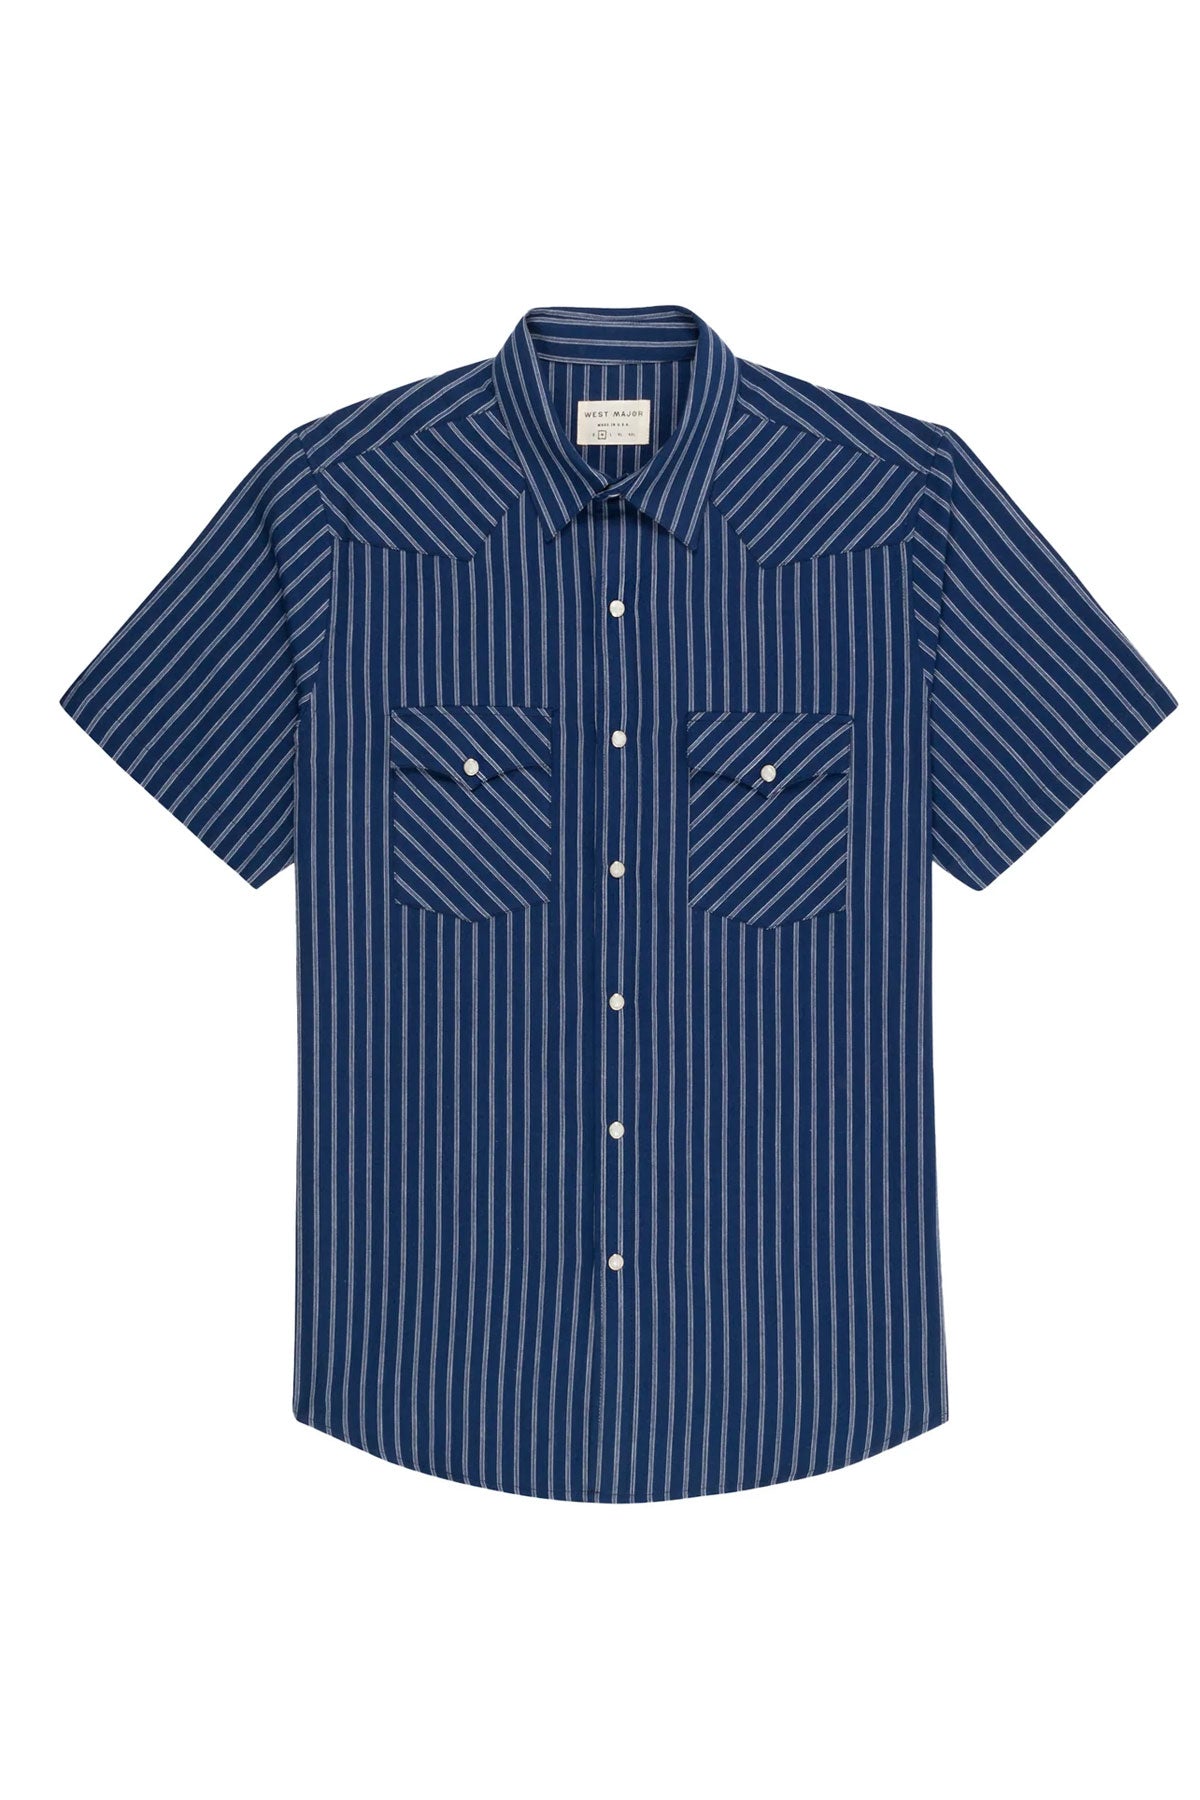 West Major - Indigo Selvedge Stripe Short Sleeve Western Shirt